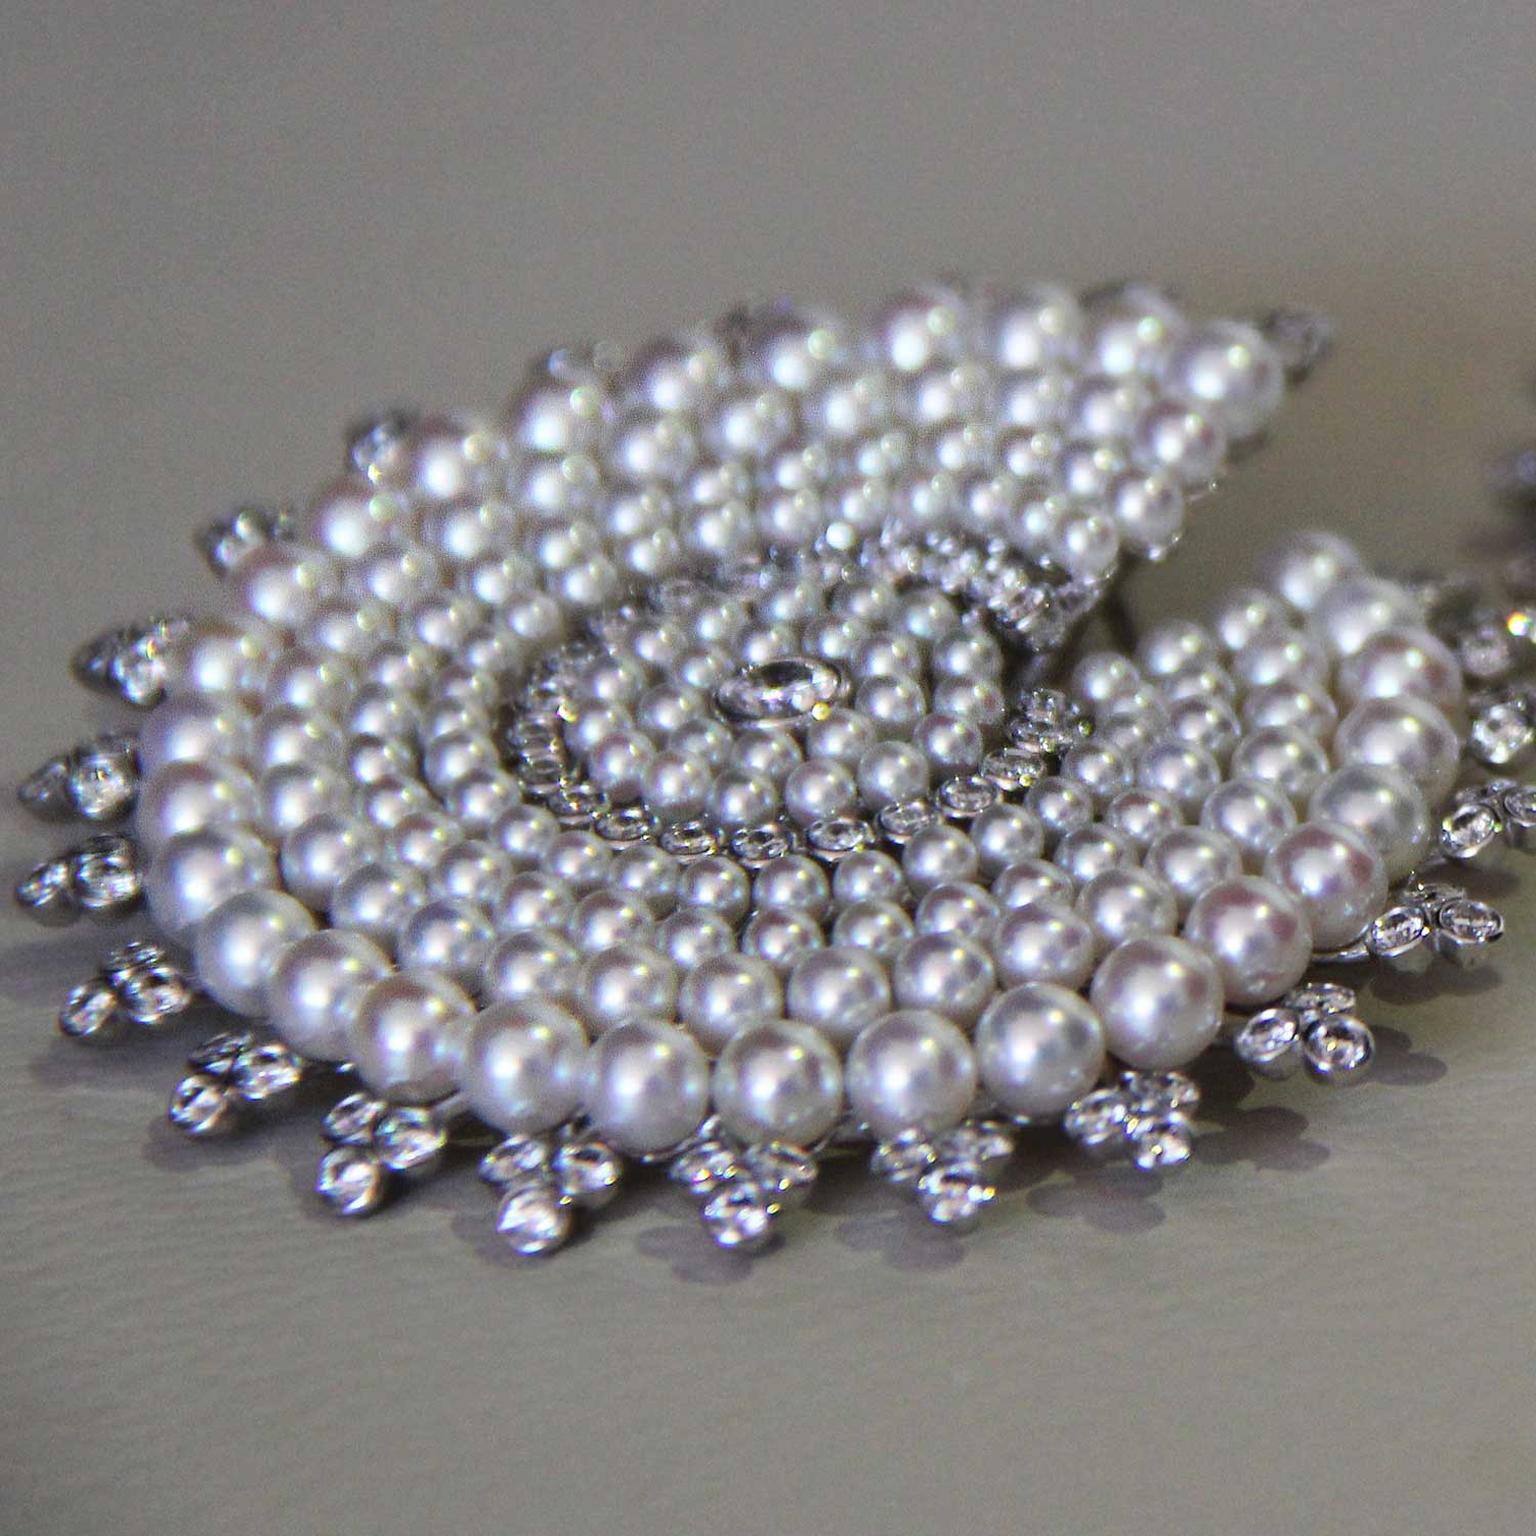 Boucheron Hiver Imperial pearl earrings